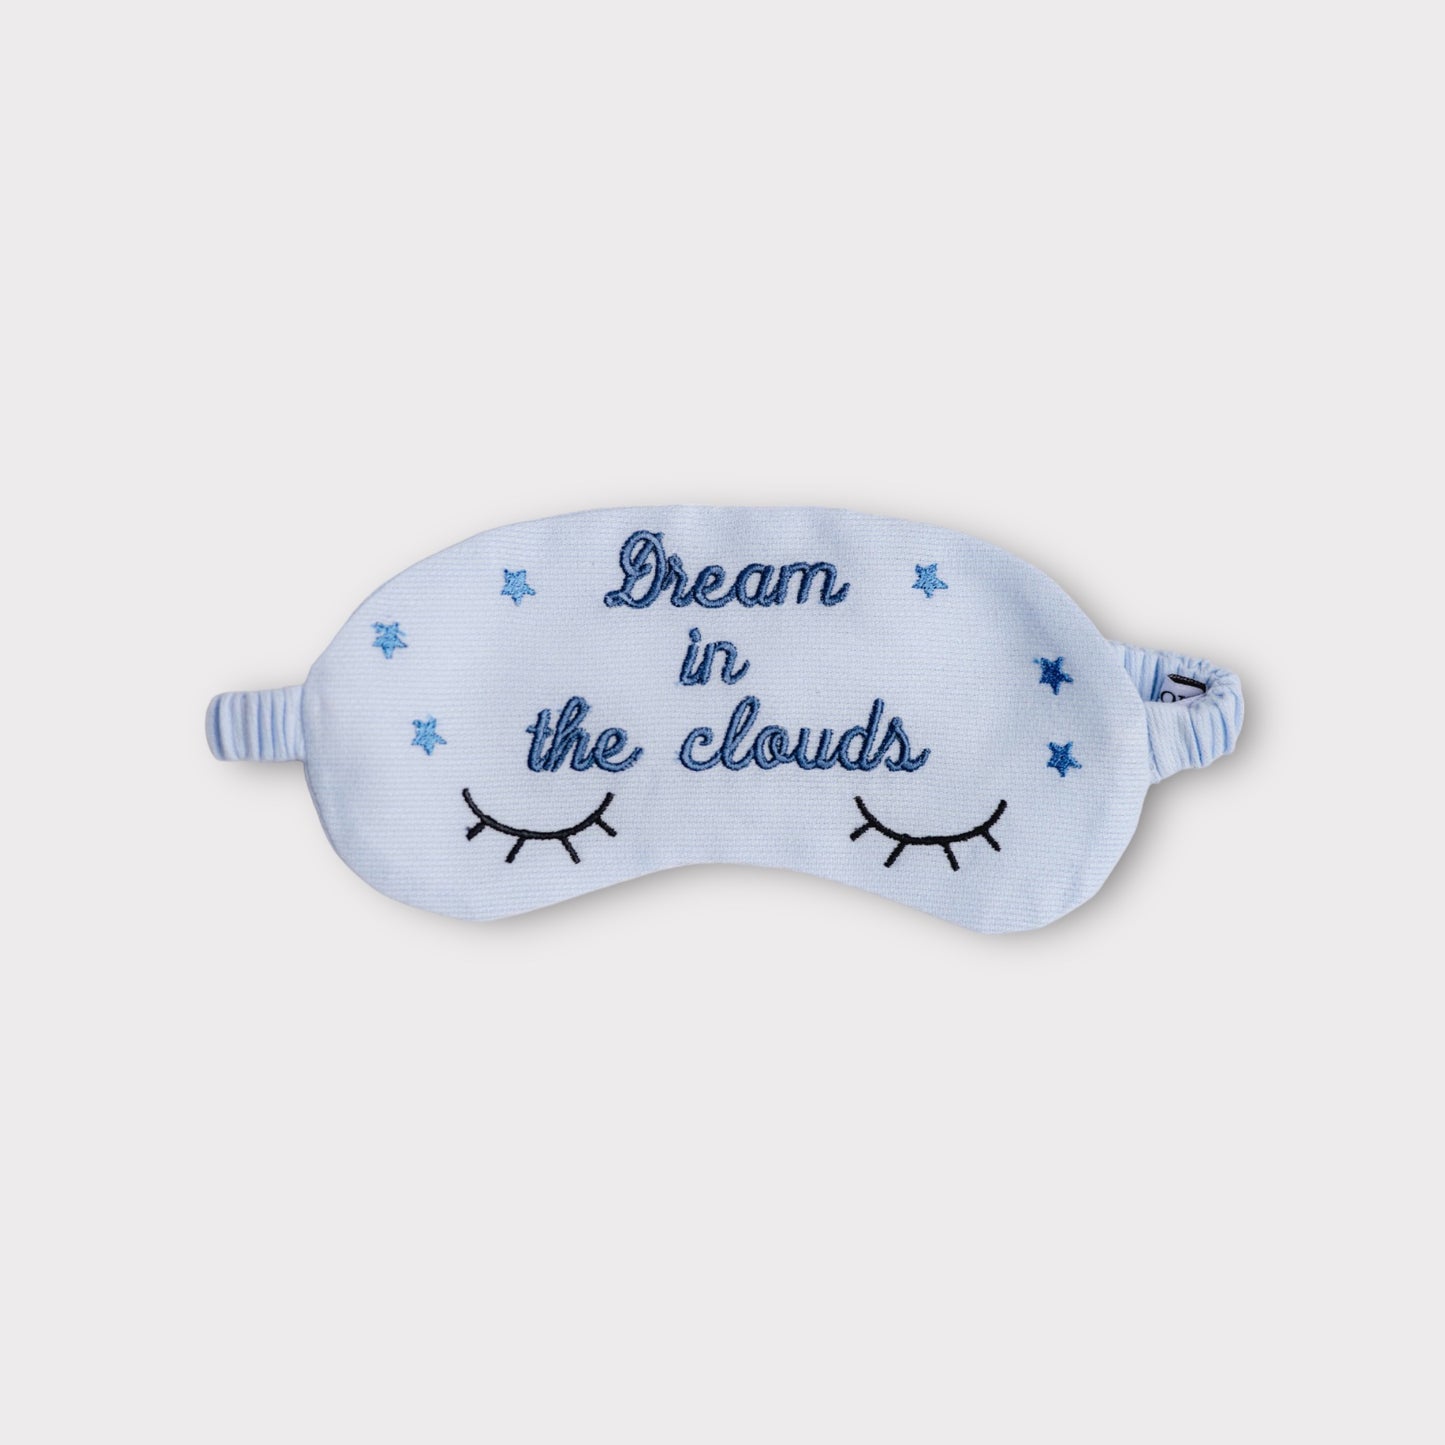 Sky Blue "Dream in the Clouds" Sleep Mask - Sleep Accessory for Kids on the Go